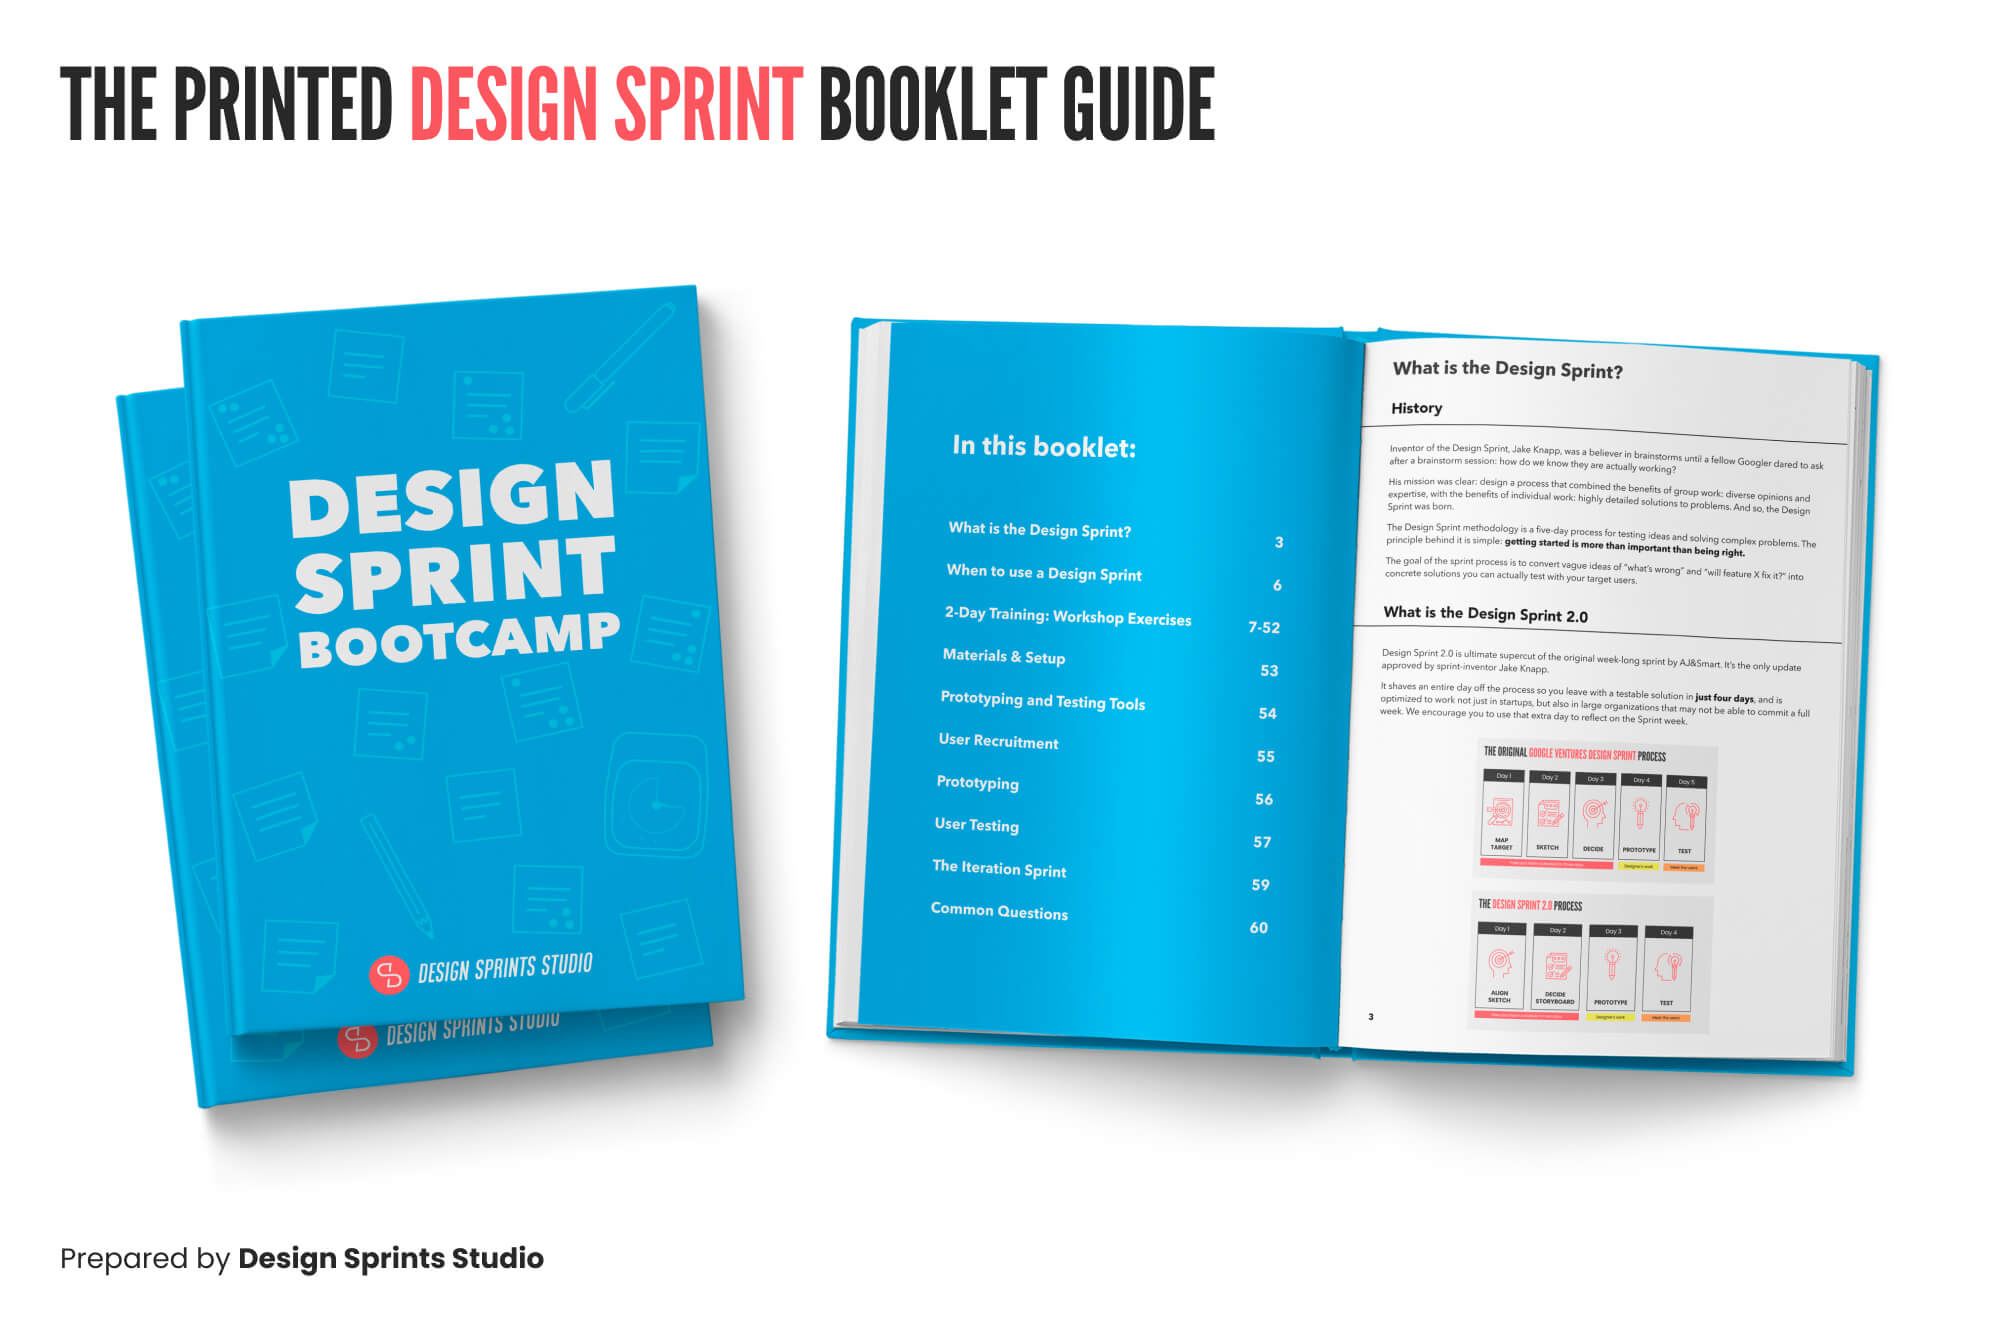 Printed Design Sprint Bootcamp Booklet